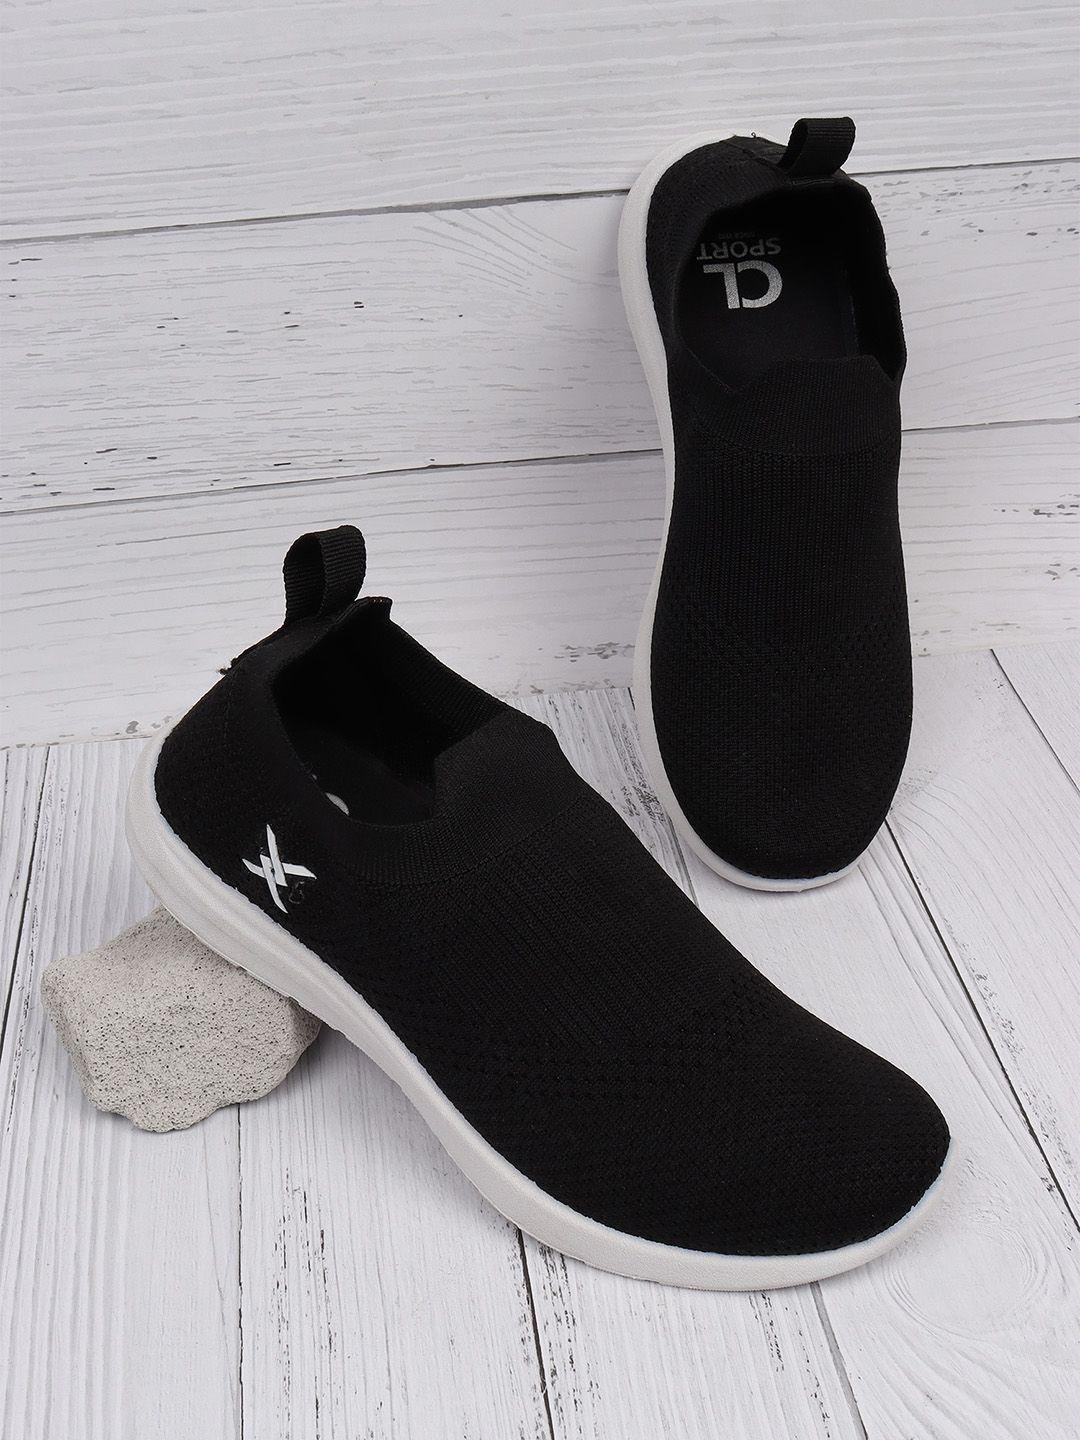 carlton london sports women black woven design slip-on sneakers